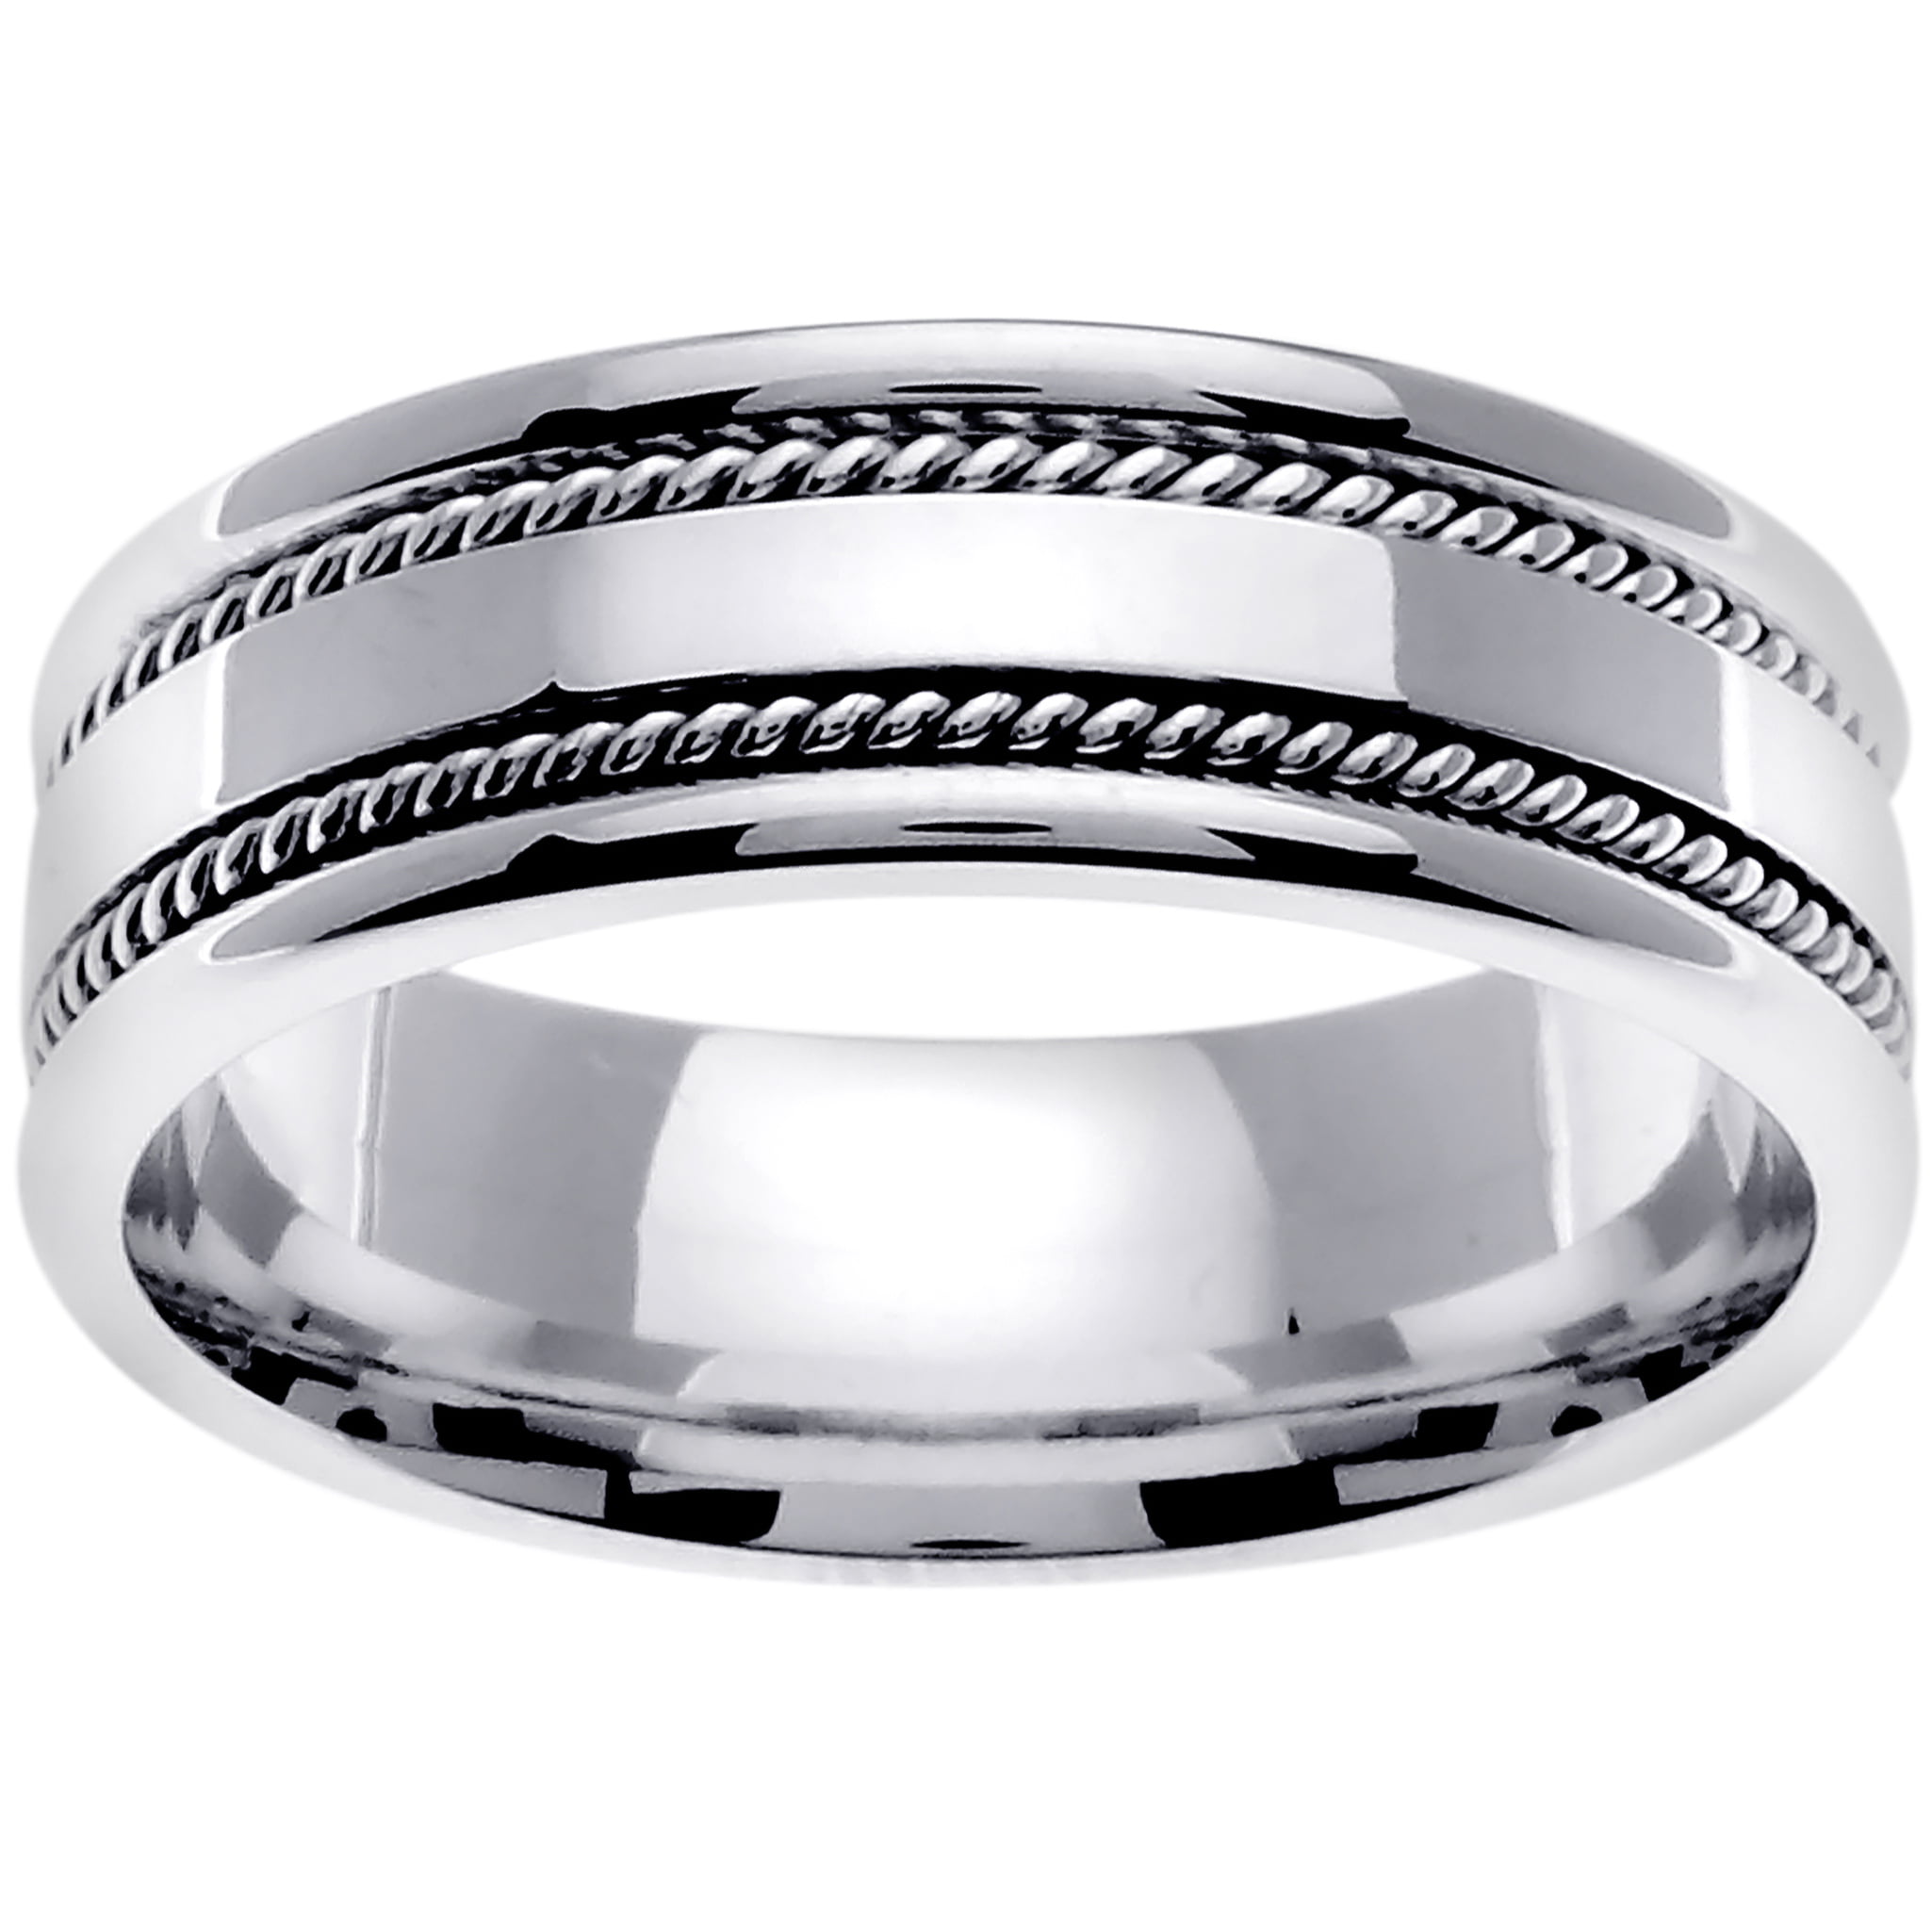 8mm Tungsten Carbide Ring Wedding Band Carved 18K Gold IP Silver Swirl SZ 7-11 